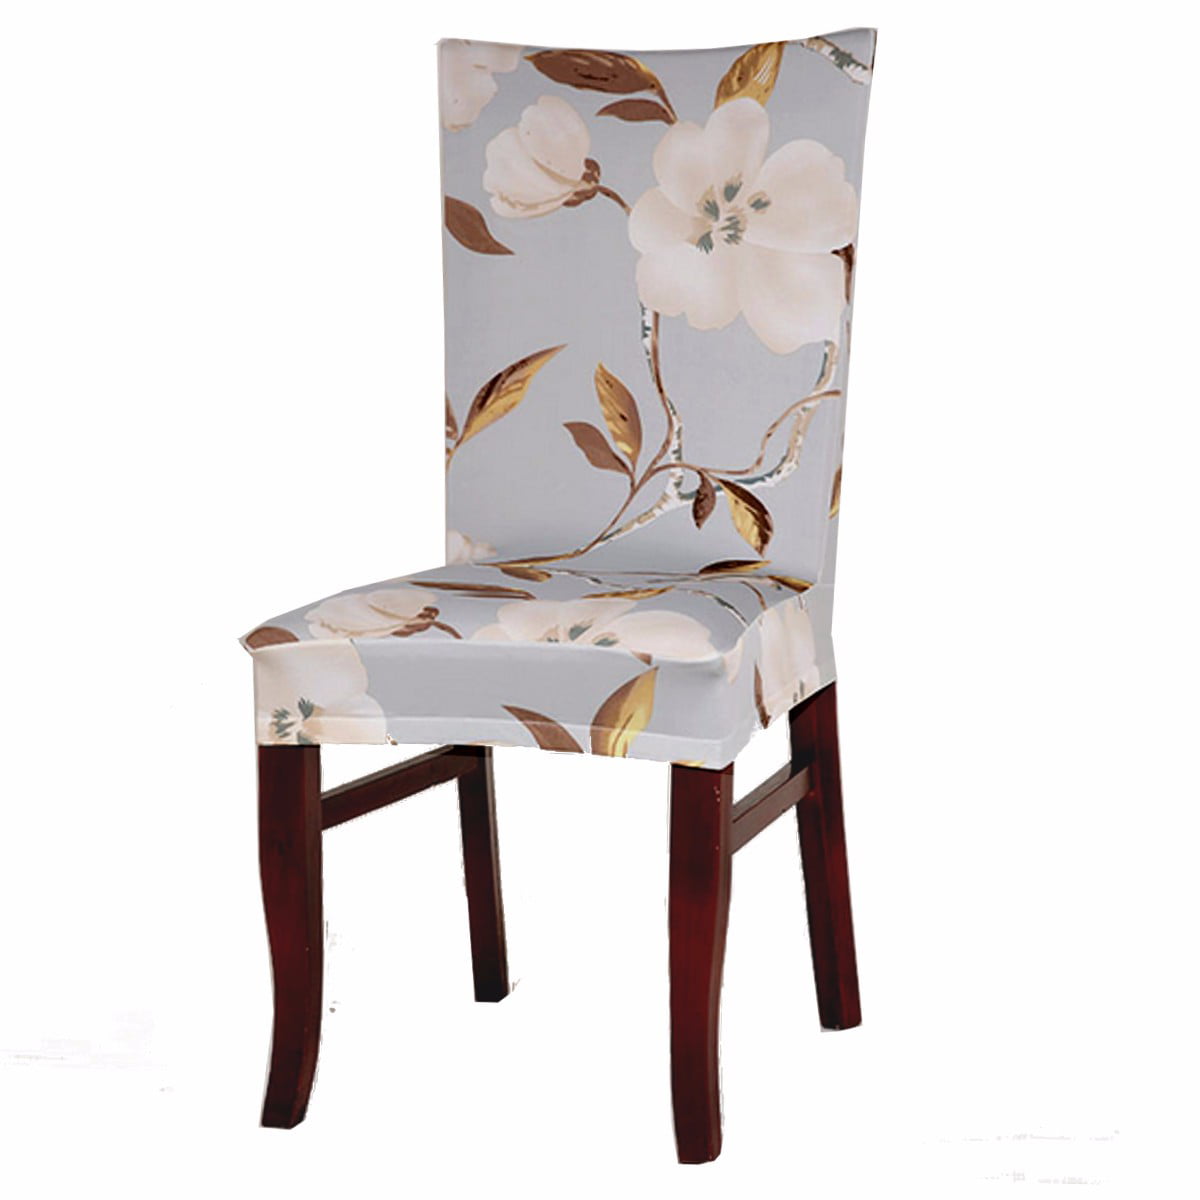 1//4//6pcs Twill Jacquard Bar Stool Chair Cover Short Back Seat Chair Slipcover